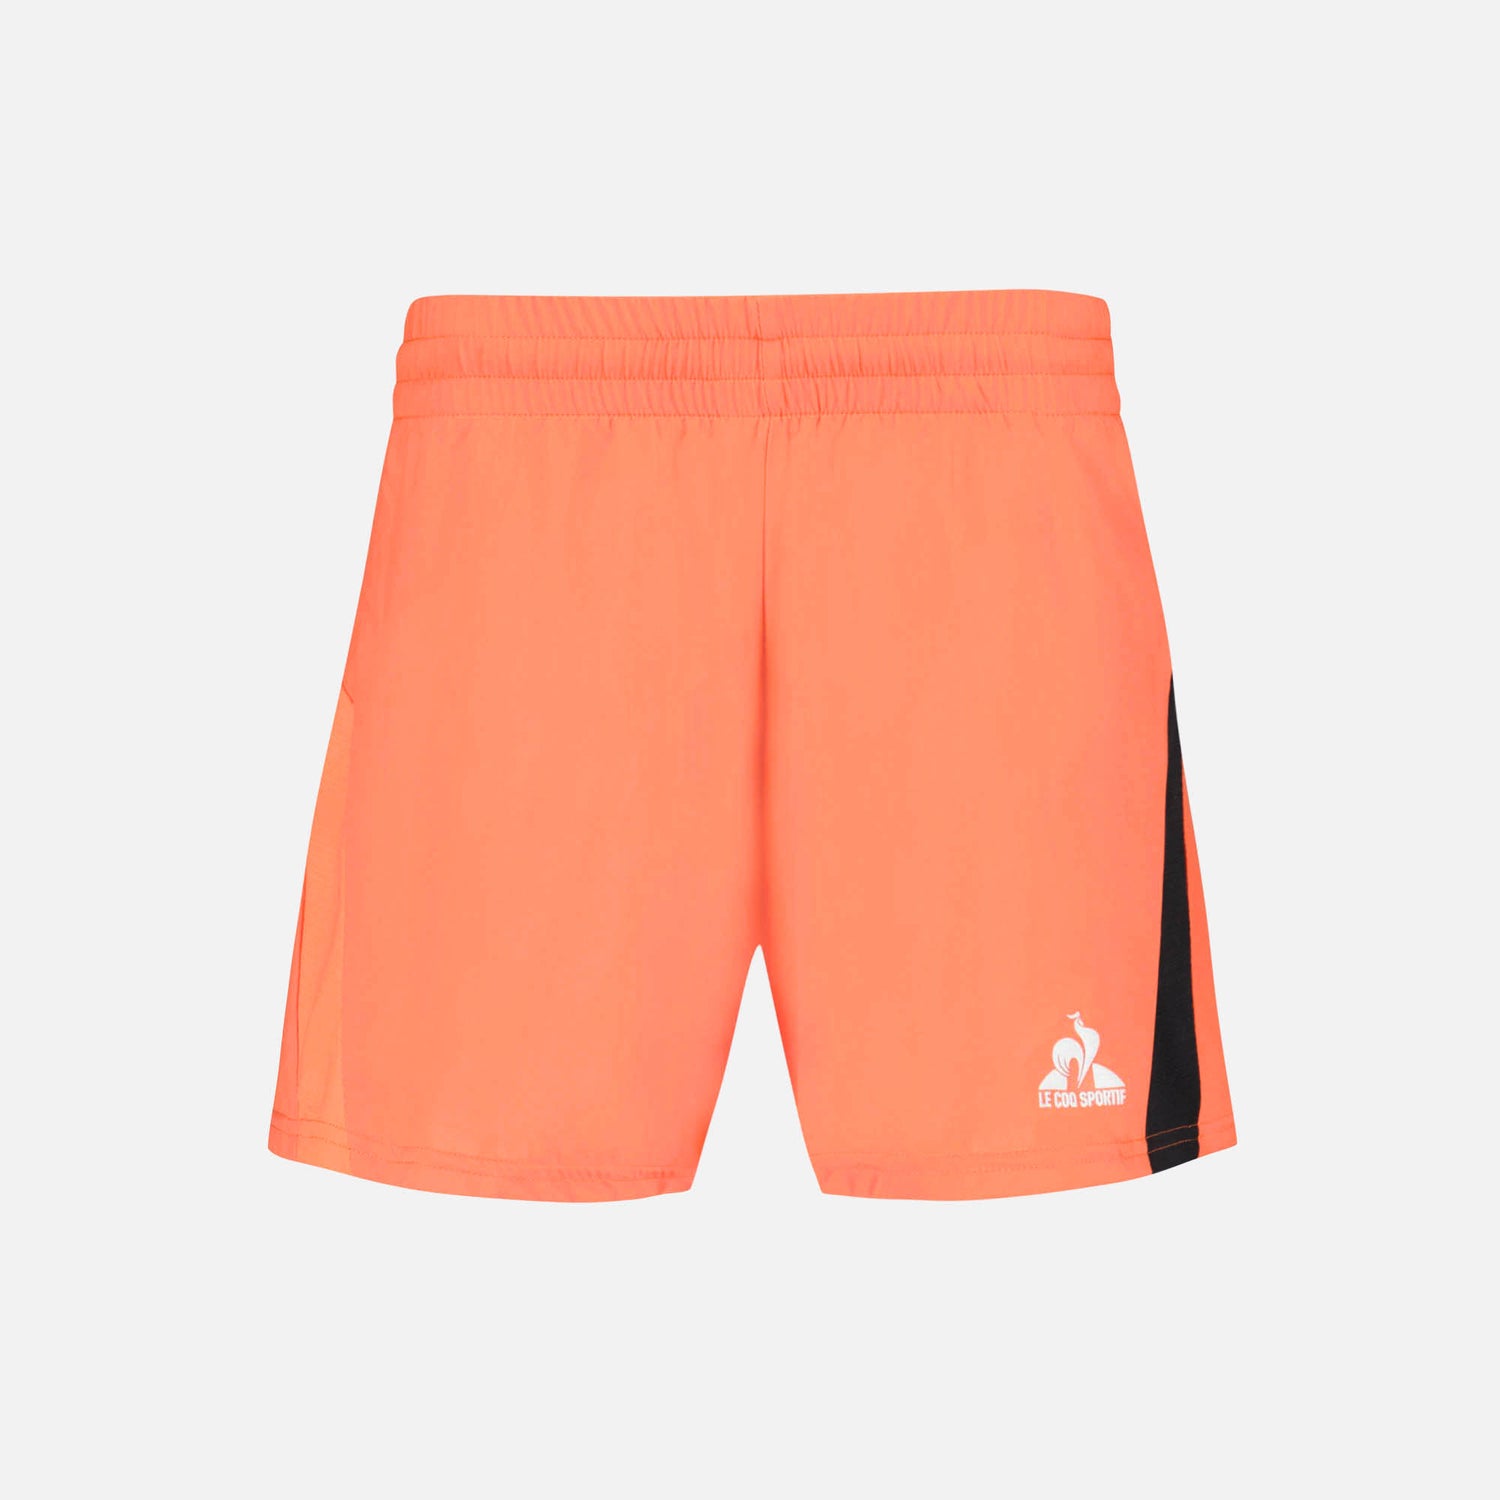 2410238-TRAINING Short N°1 W orange perf/black  | Shorts for women